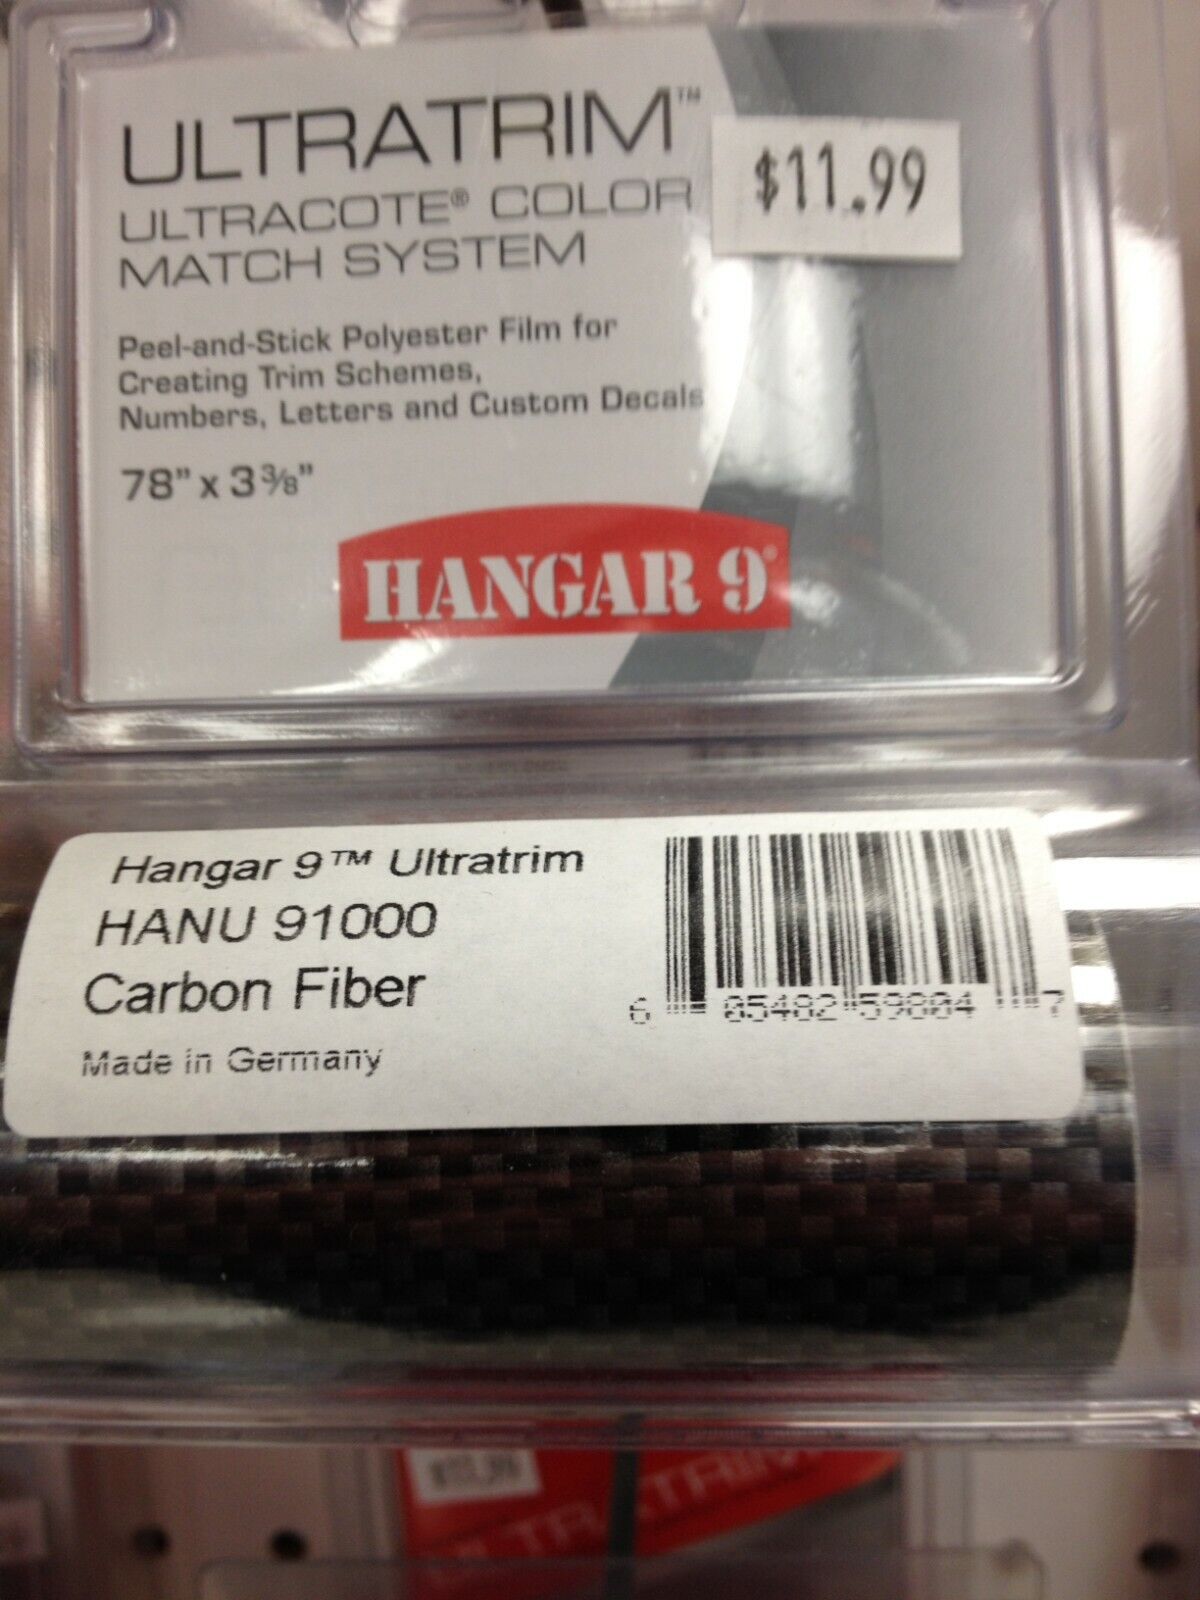 Hanger 9 Ultra Trim HANU 91000 Carbon fiber lot of two